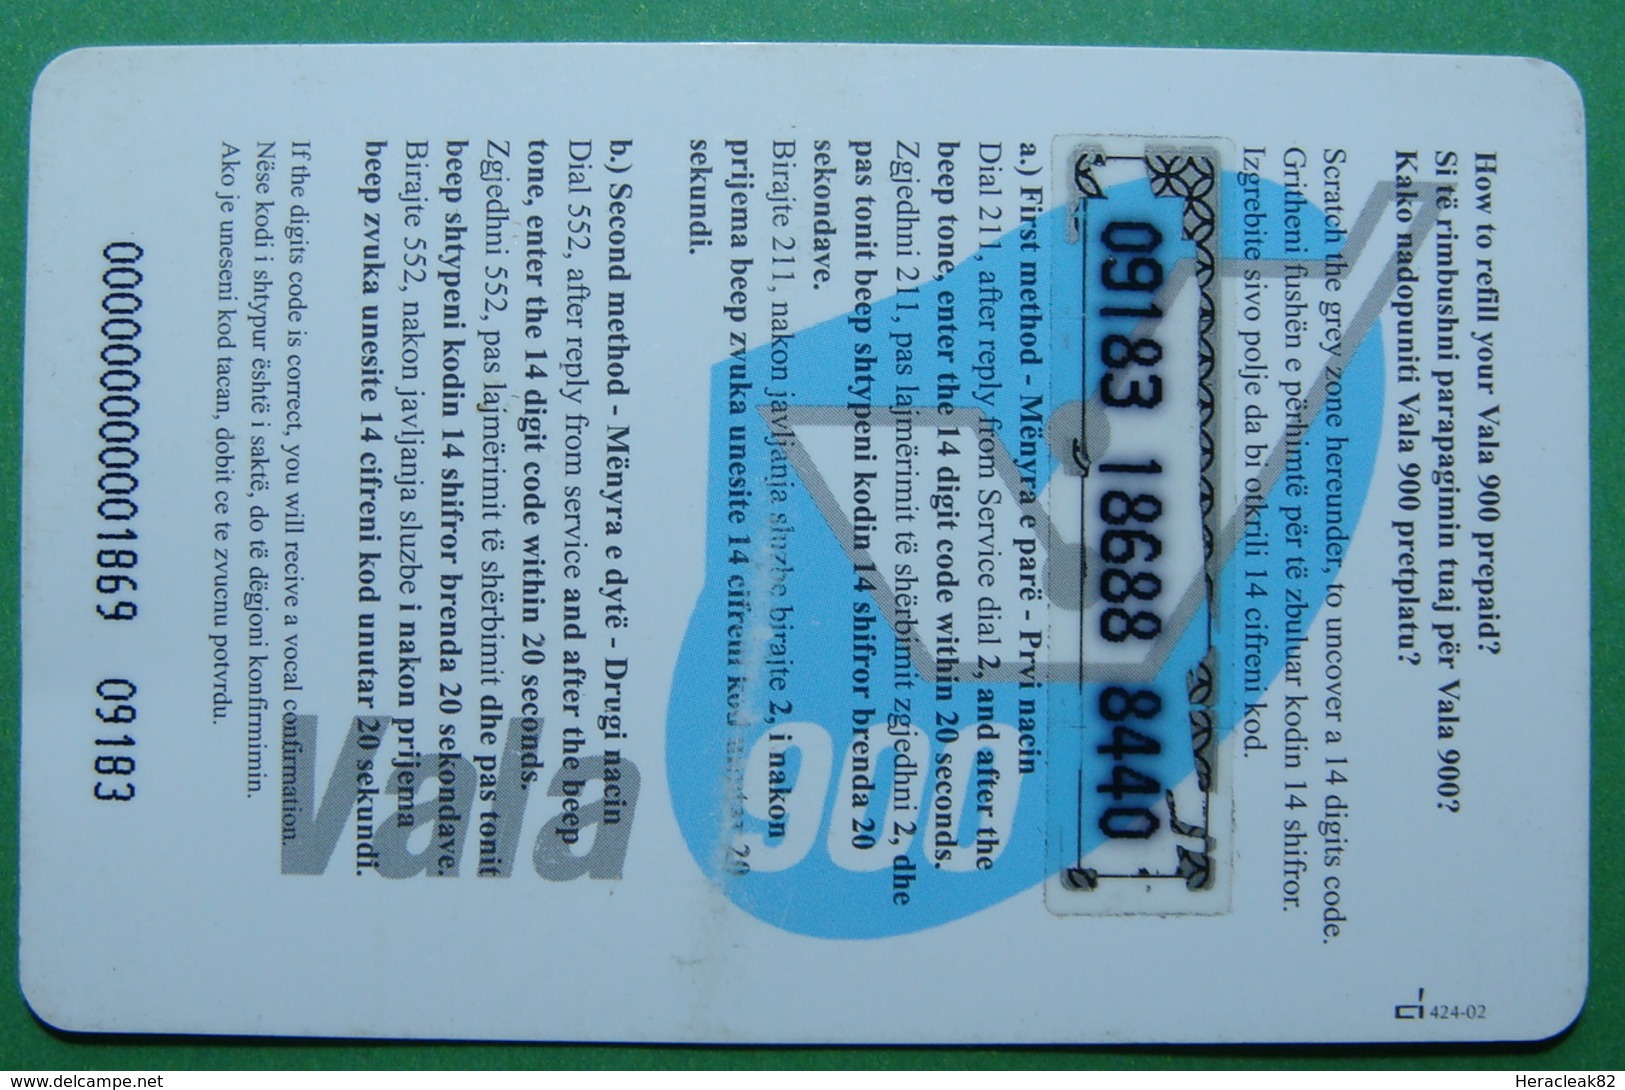 3 Ed.Kosovo PREPAID PHONE CARD 30 EURO USED Operator VALA900 Serial # 09183 *OLD RUG* - Kosovo